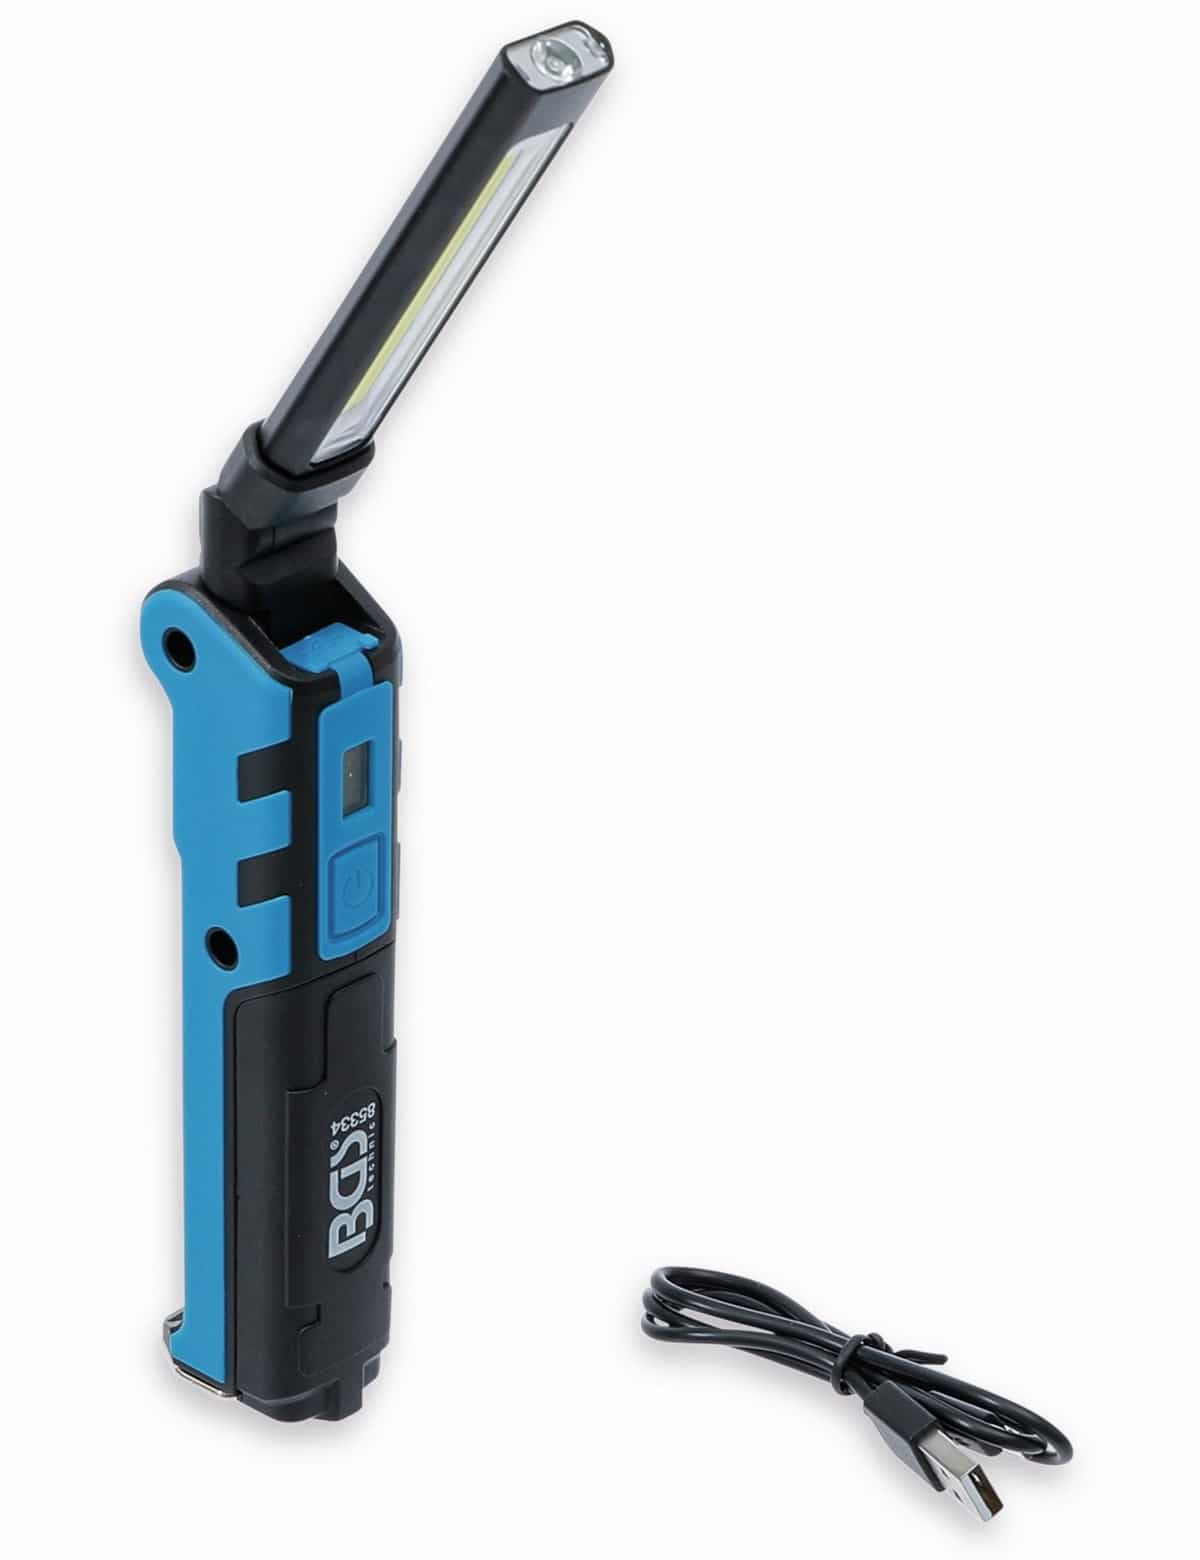 BGS TECHNIC LED-Knicklampe 85334, 3,7V, 2000 mAh, klappbar, blau/schwarz von BGS TECHNIC